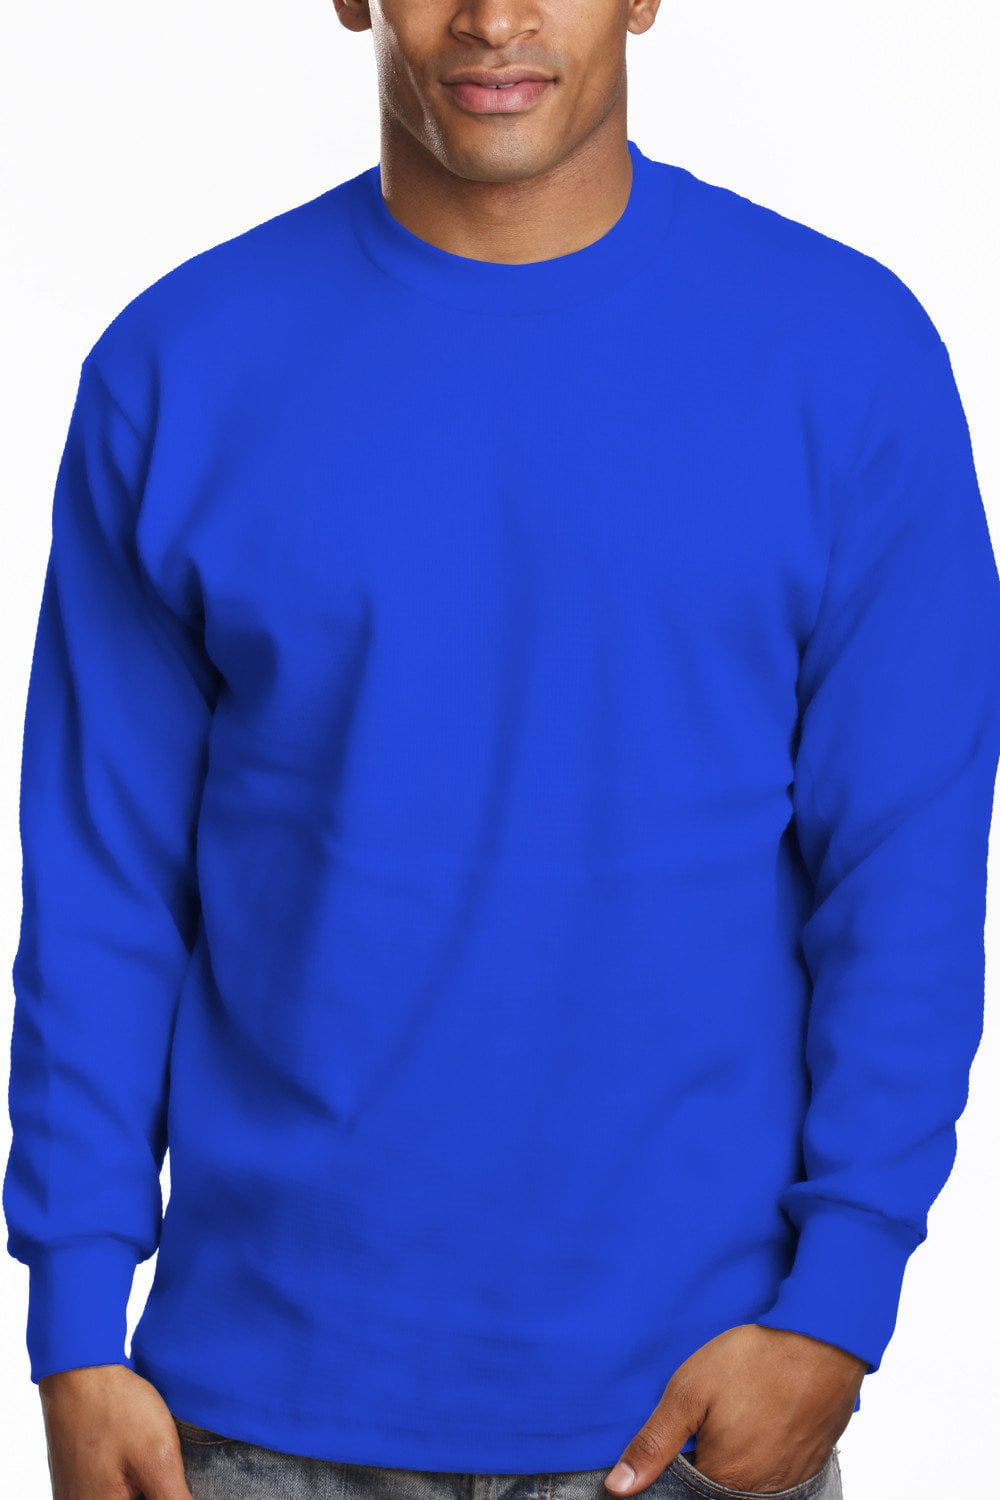 Pro 5 Super Heavy Mens Long Sleeve T-Shirt,Royal Blue,3XL - Walmart.com